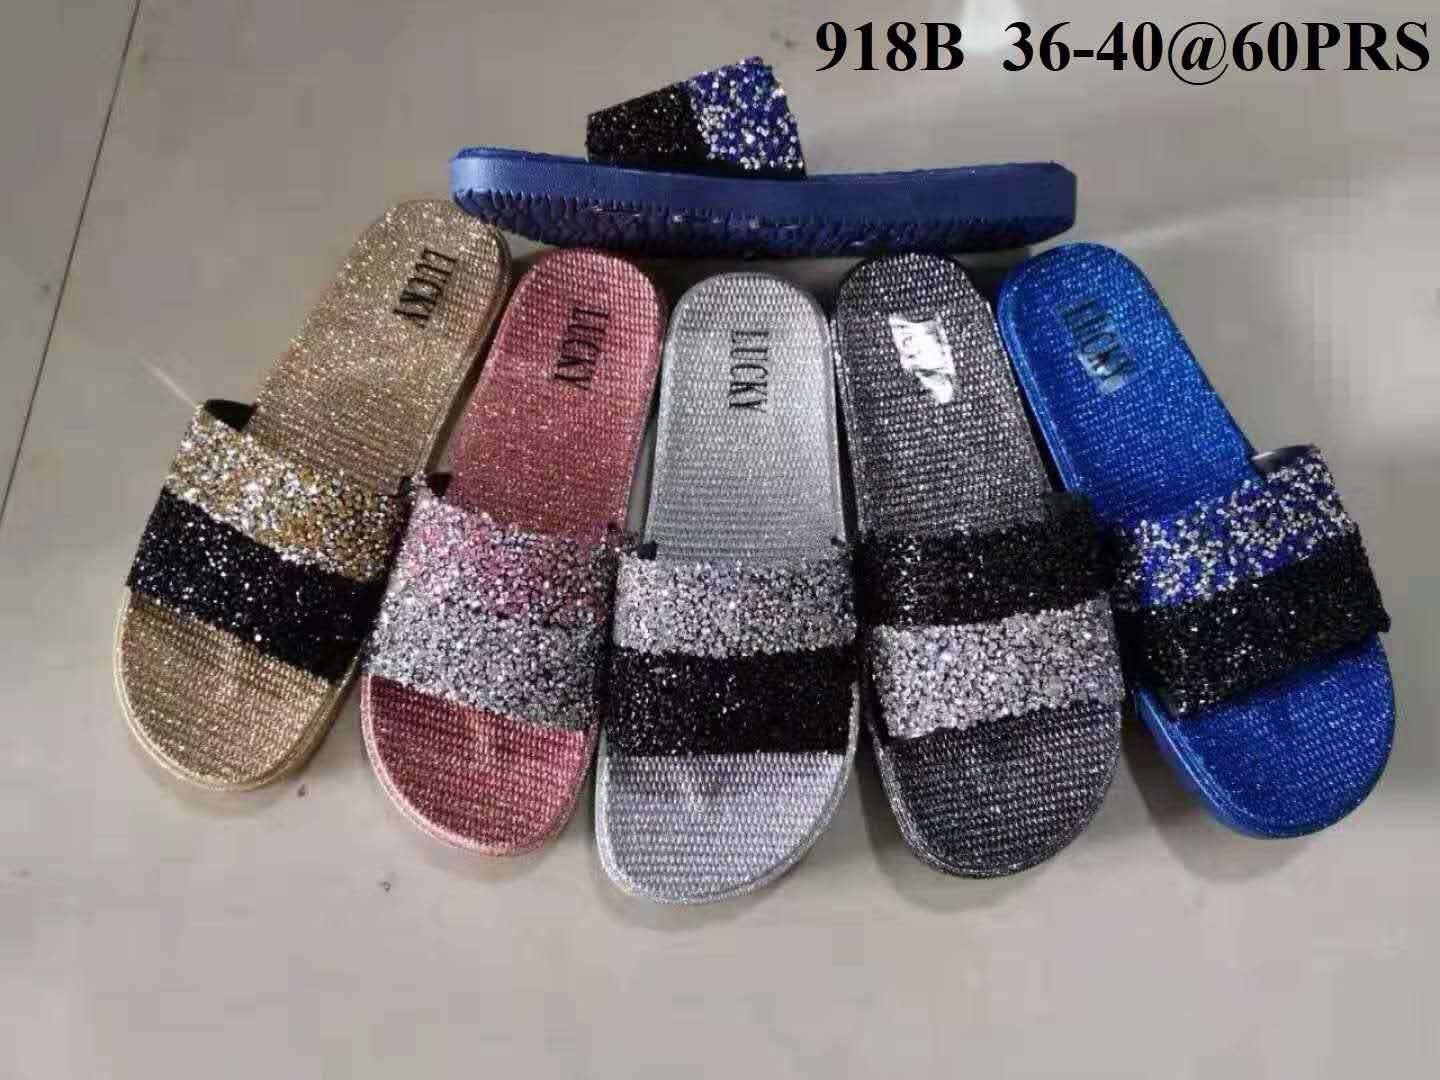 SQ - #918B Glitter house slippers for 